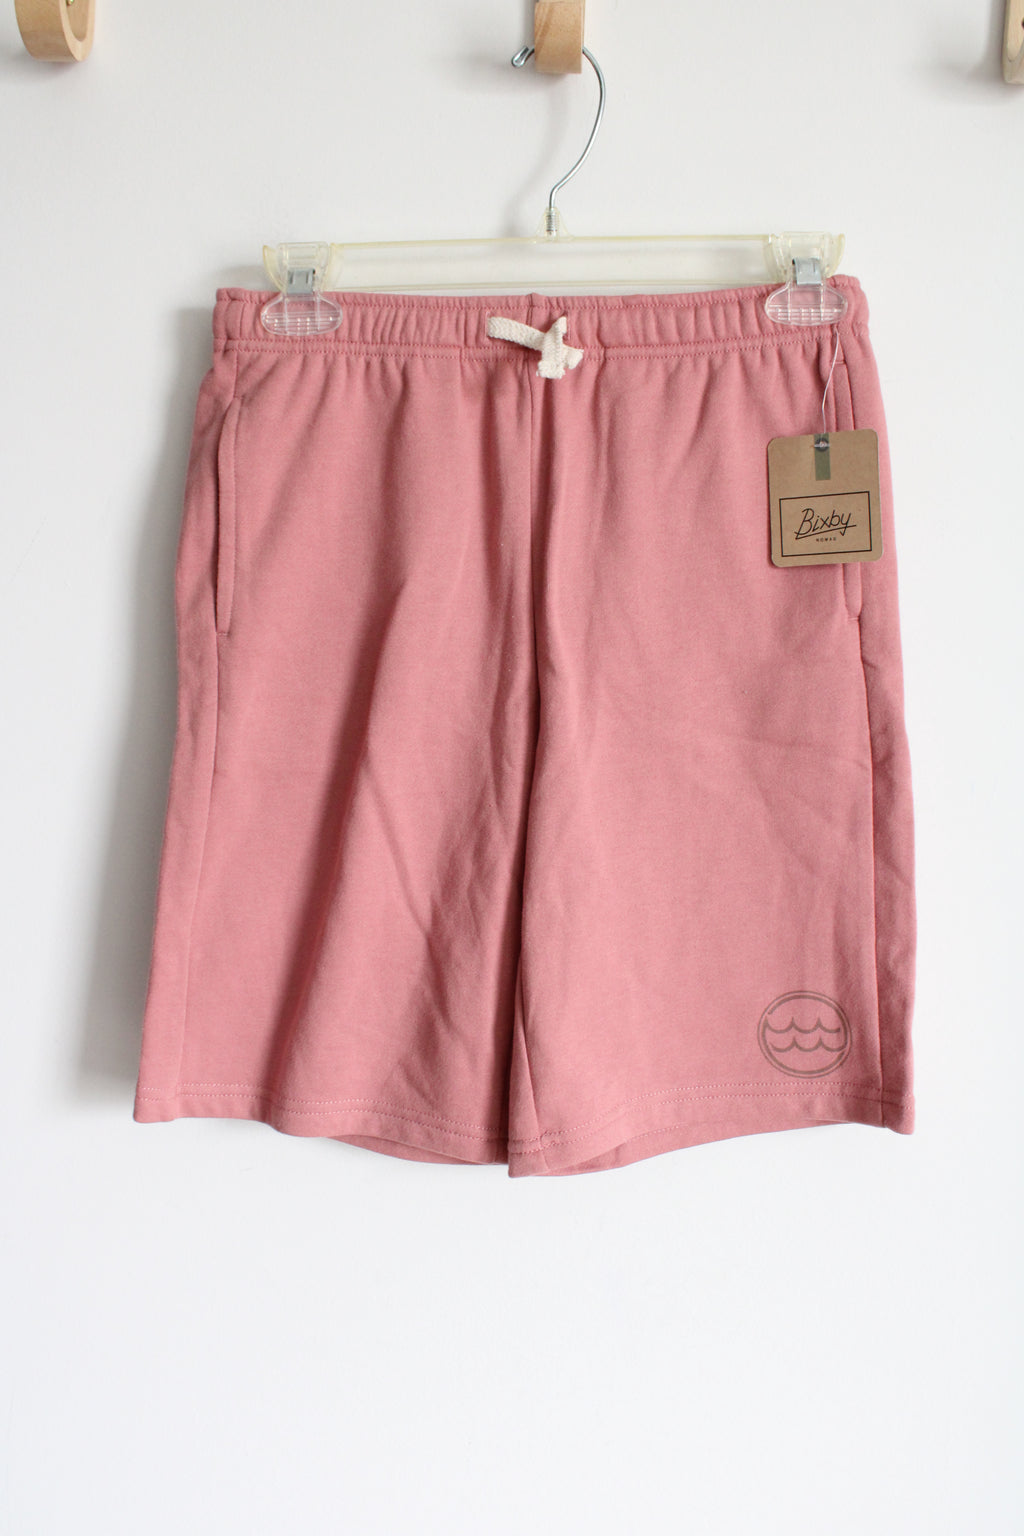 NEW Bixby Nomad Pink Shorts | 14